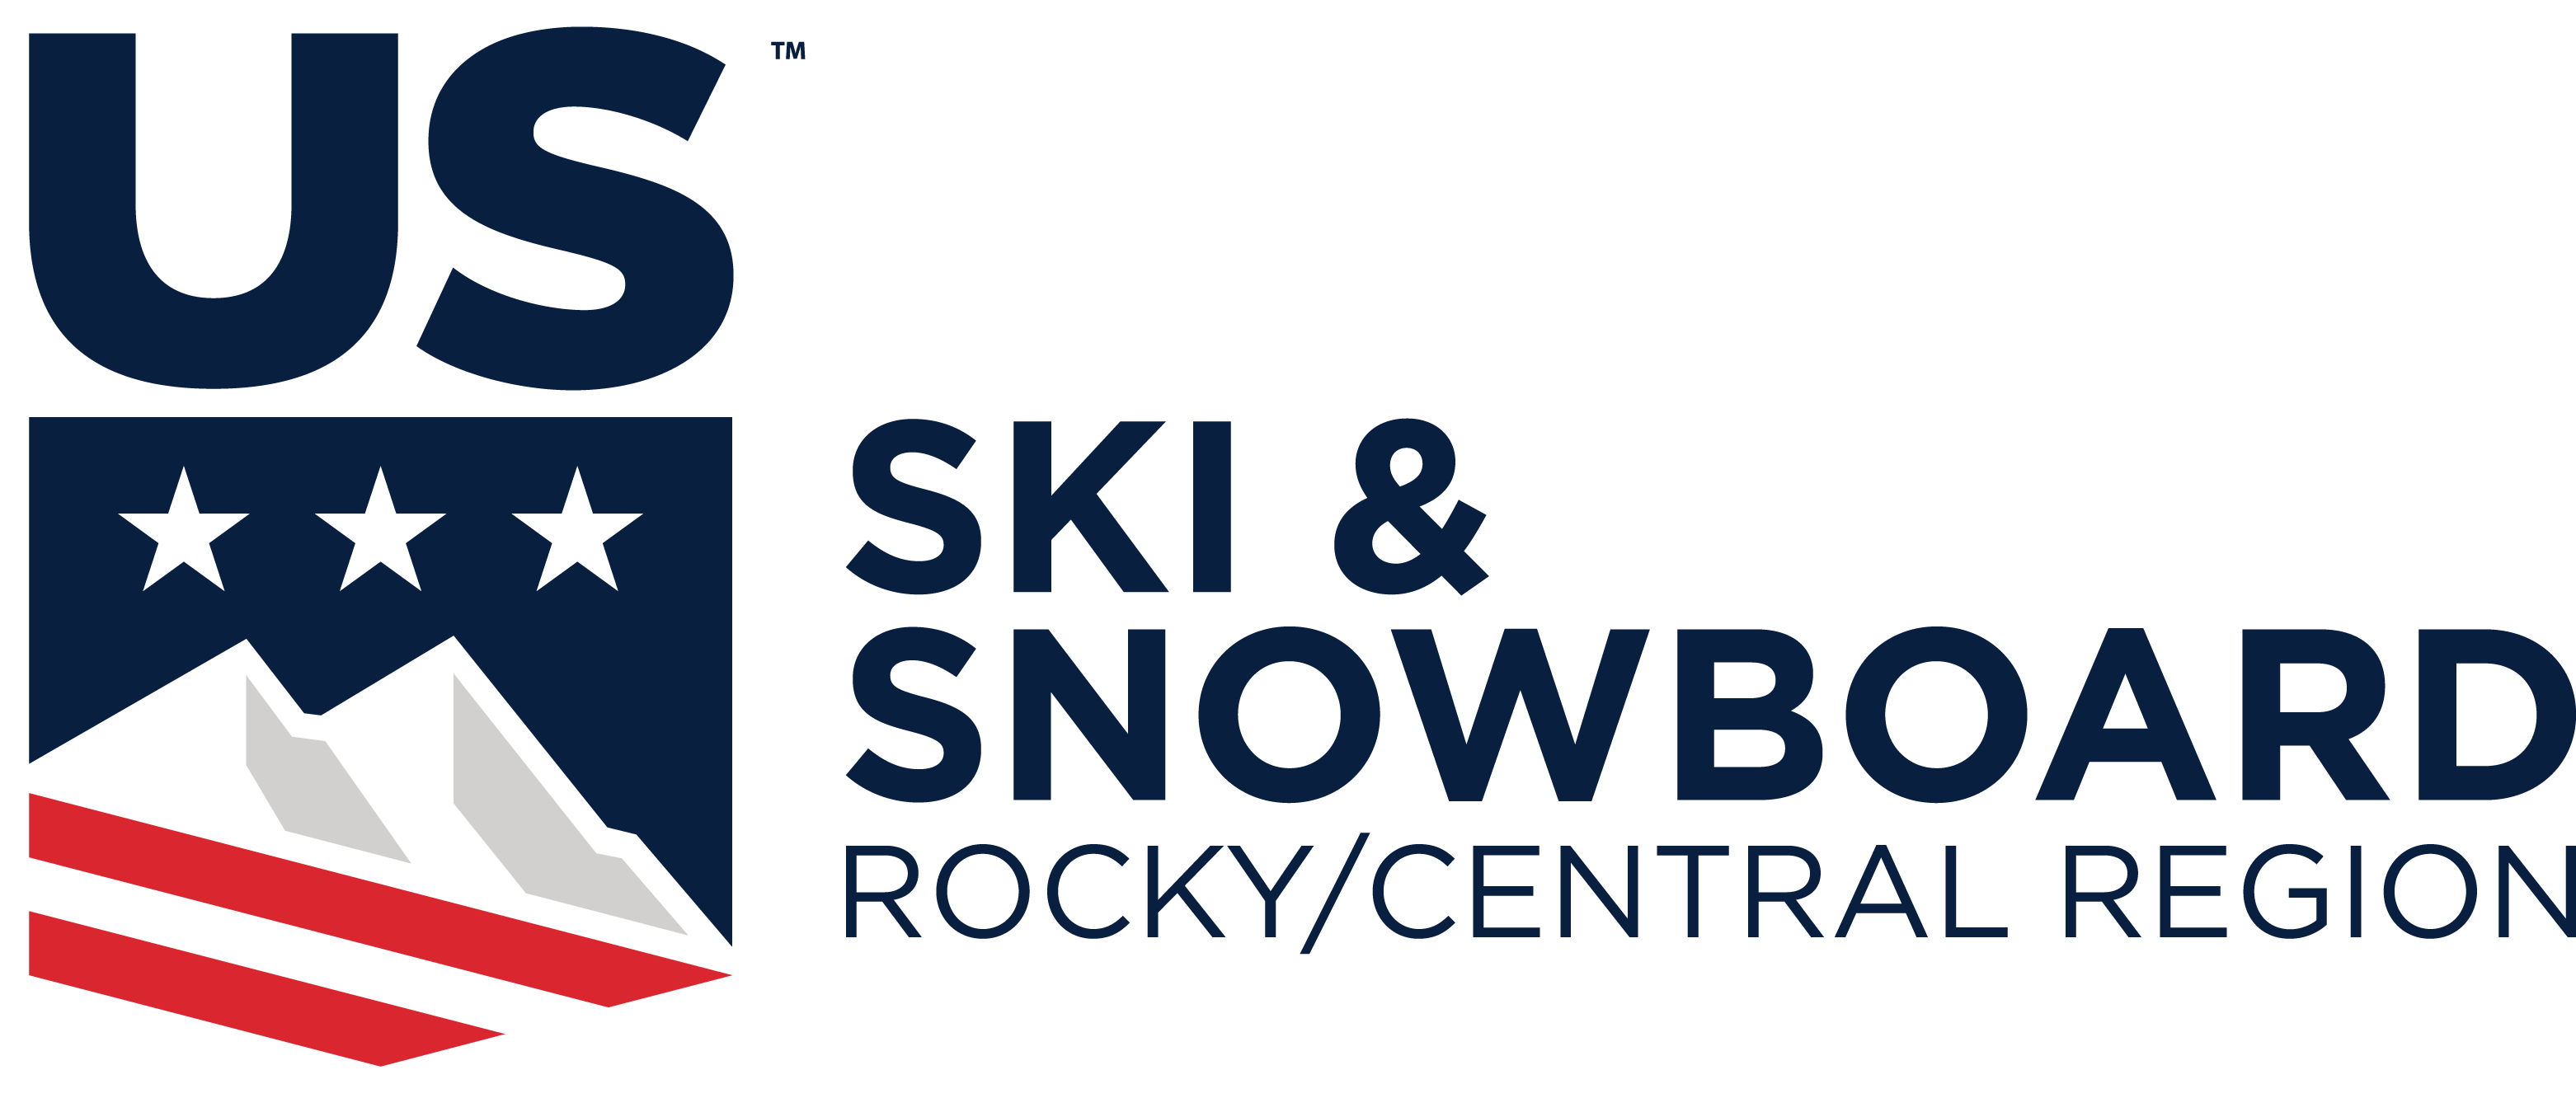 U14 Rocky Central Junior Championship (Winter Park, CO)